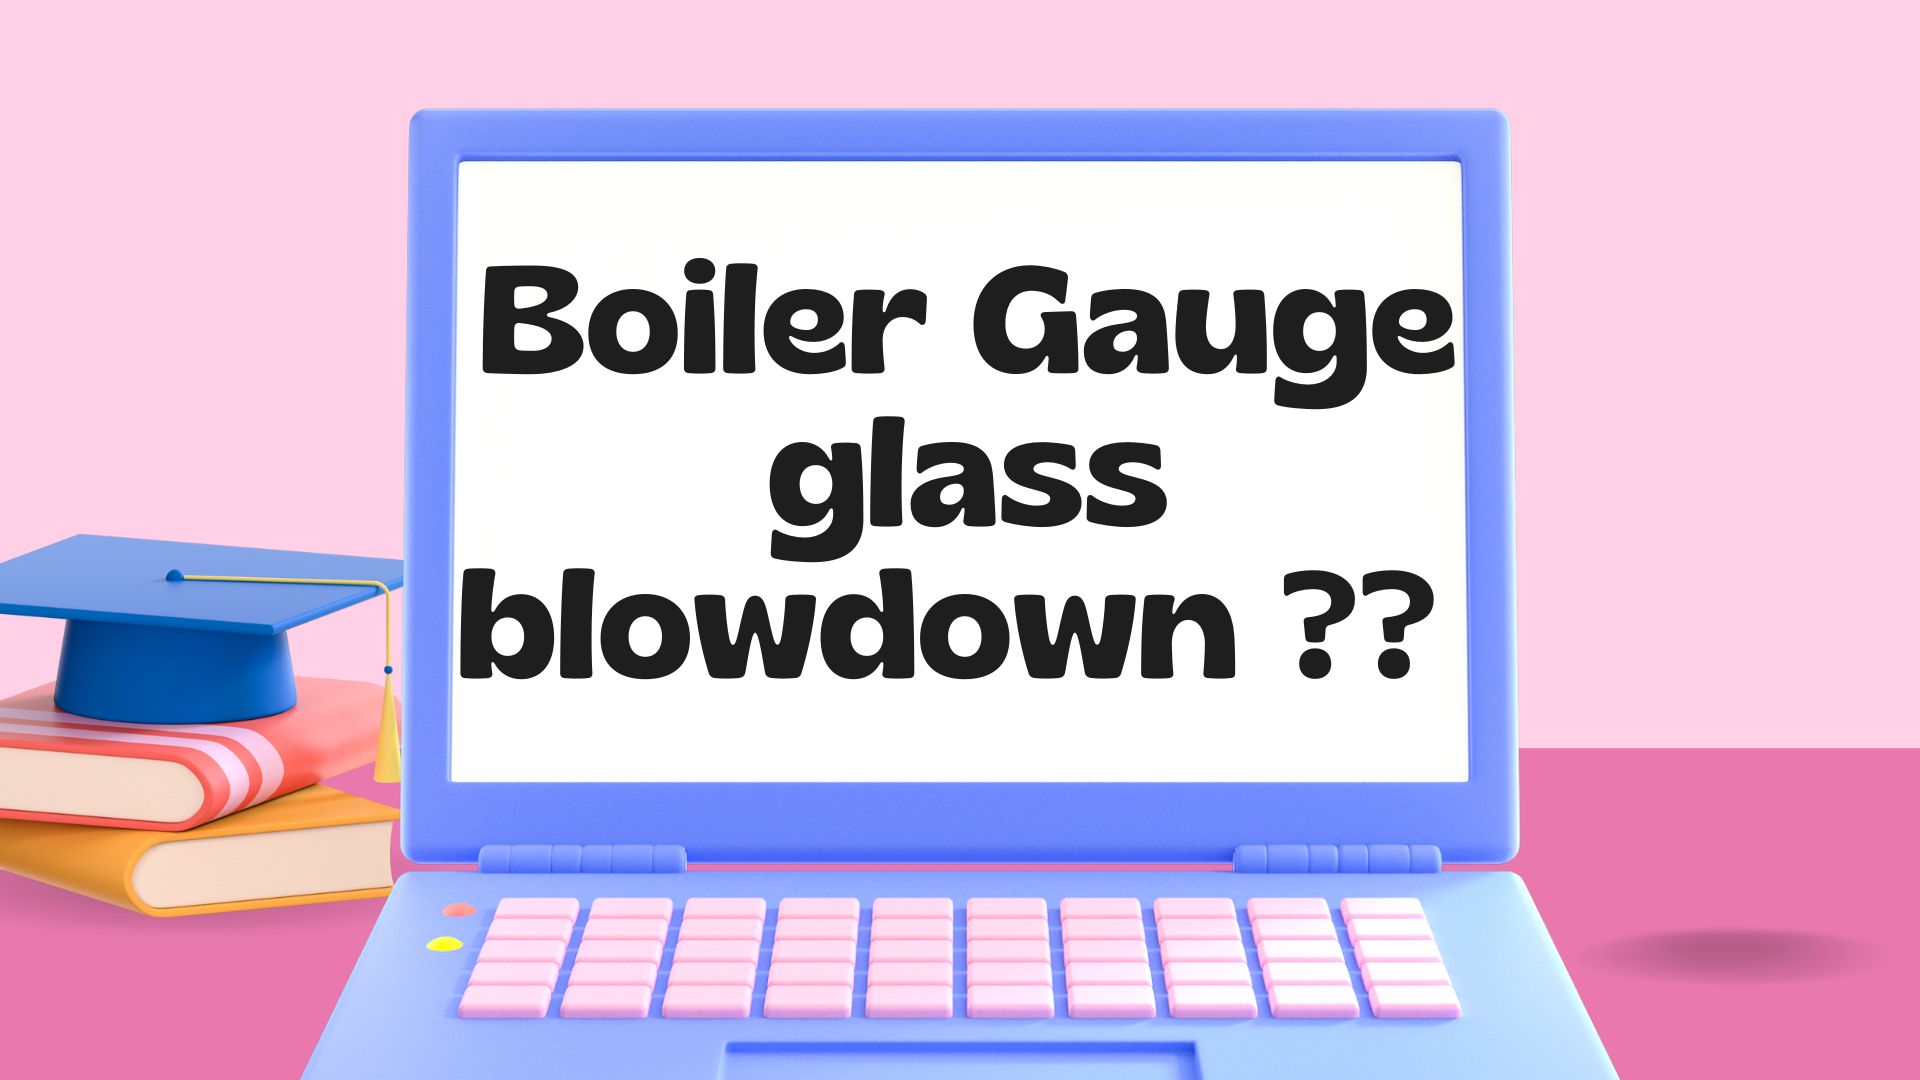 boiler gauge glass blowdown